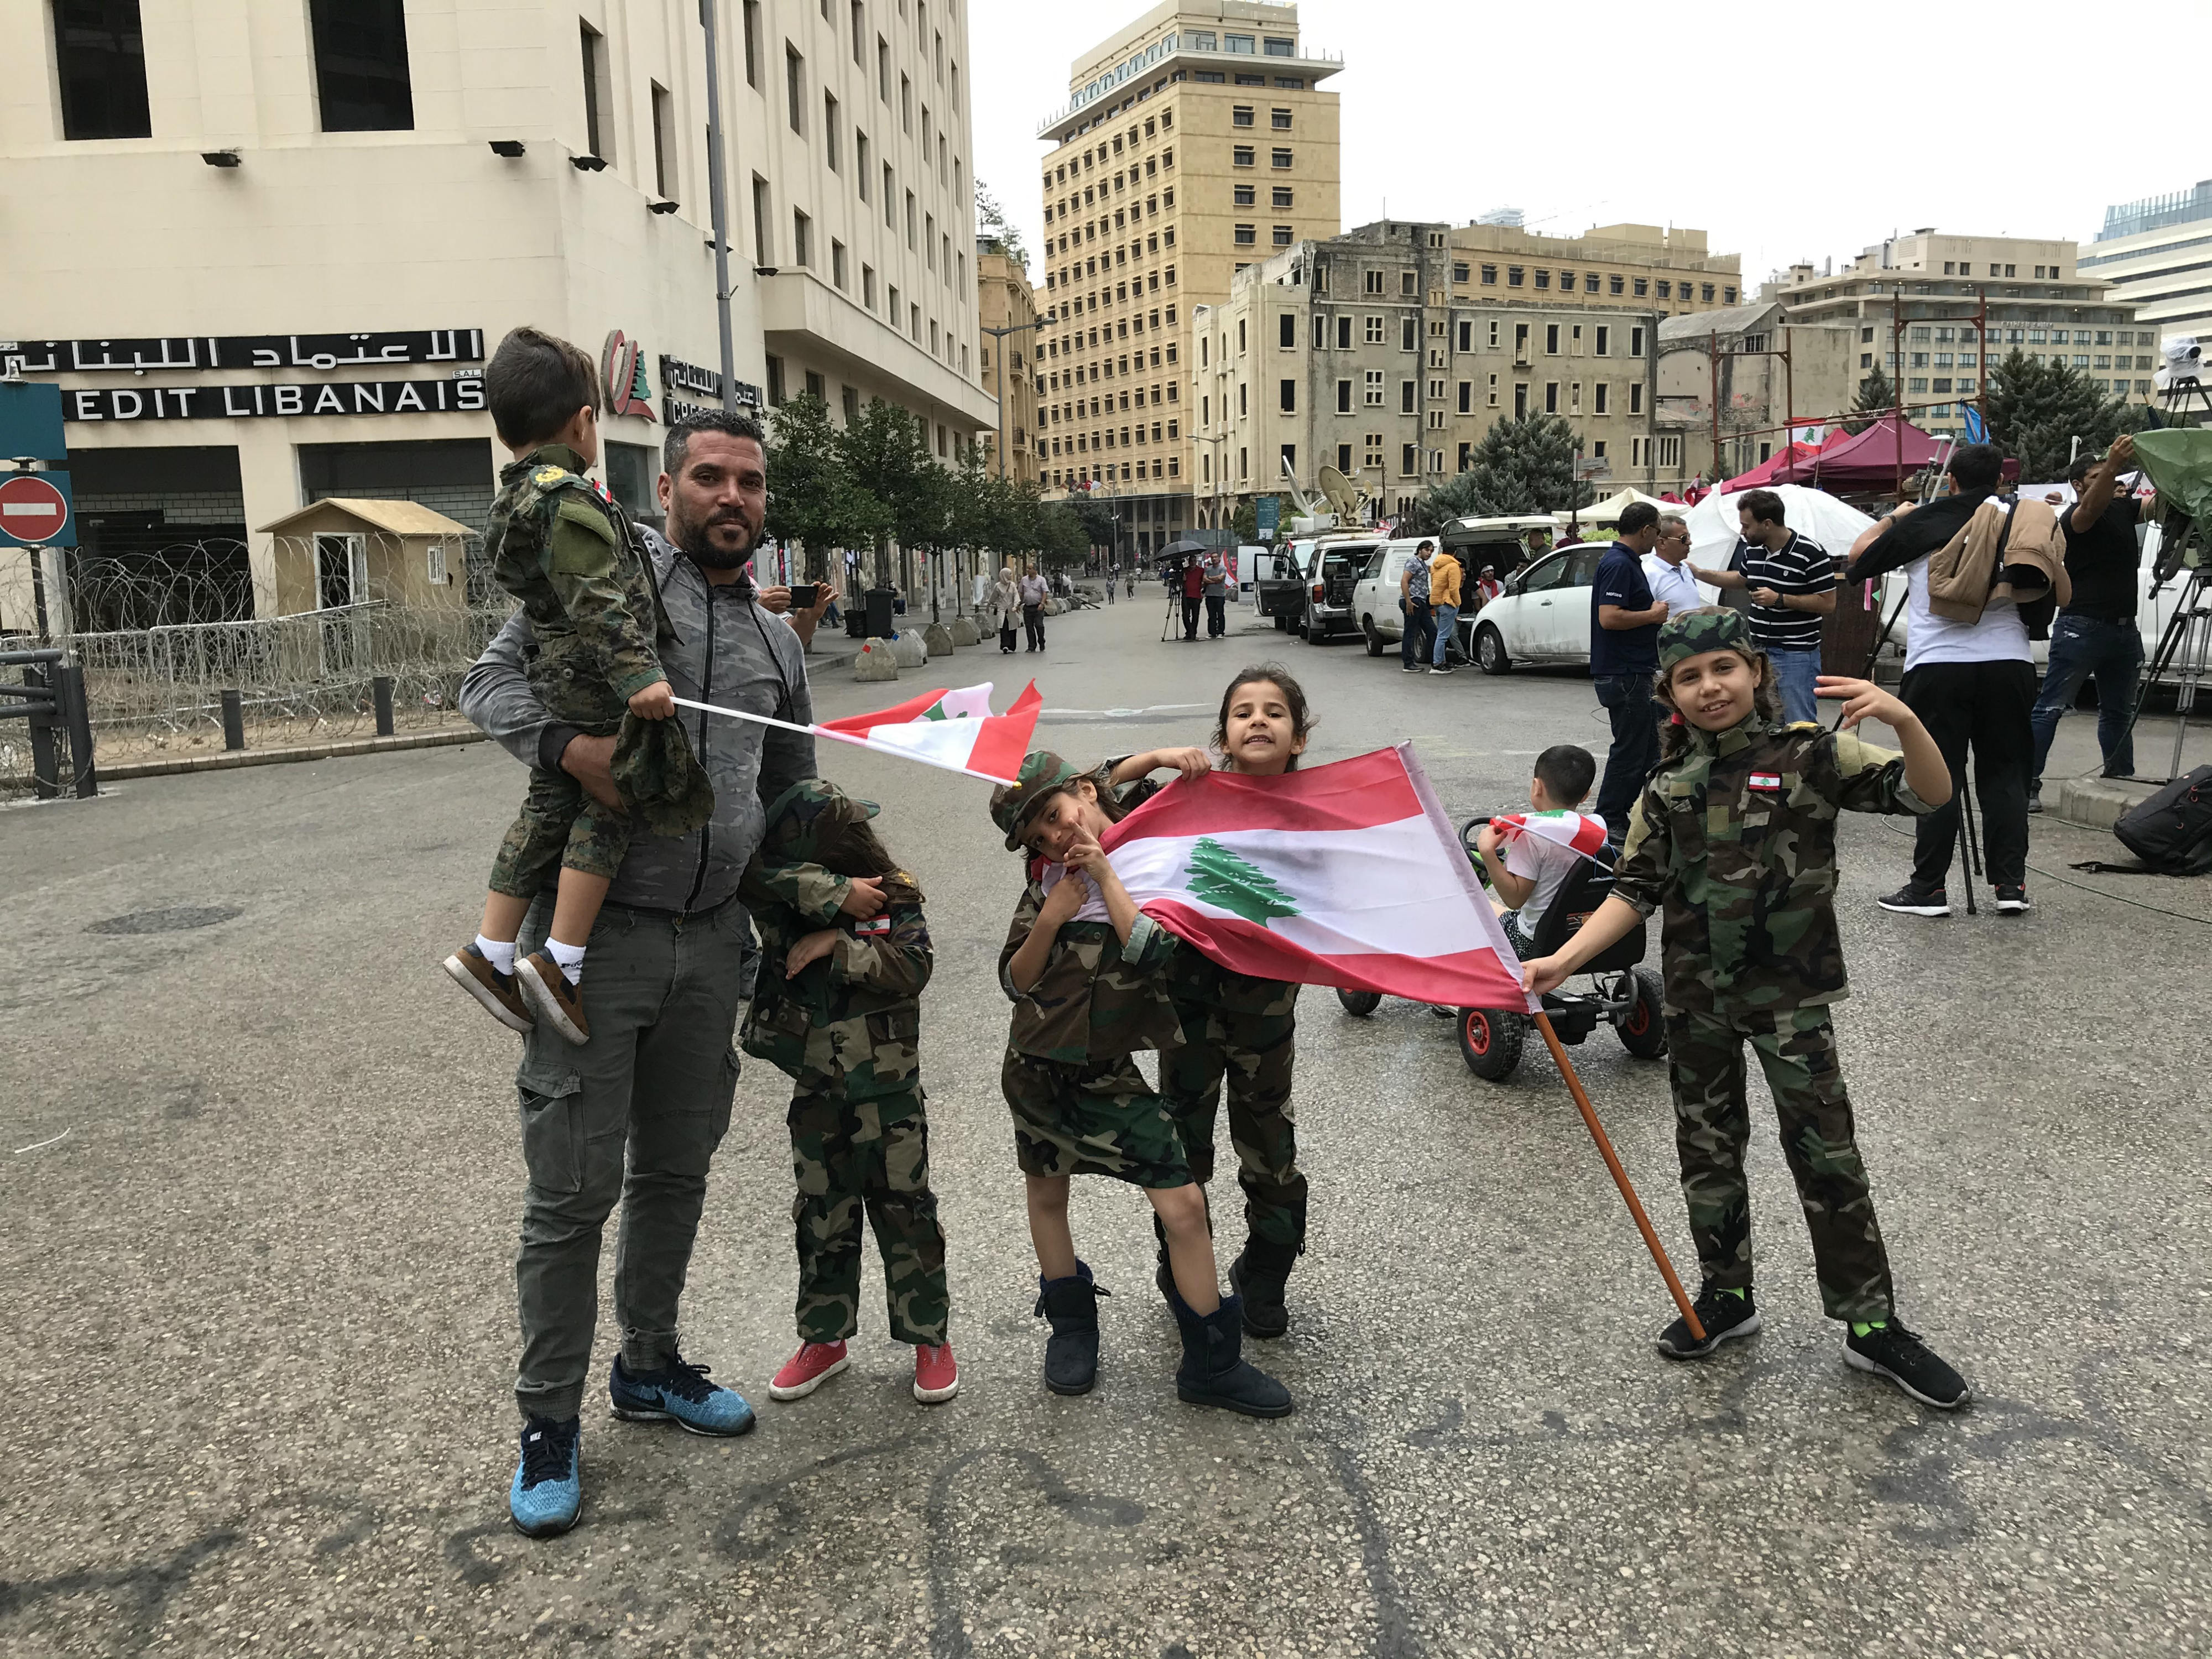 Mohammed Hussein et ses enfants manifestent dans le centre de Beyrouth (MEE/Heba Nasser)